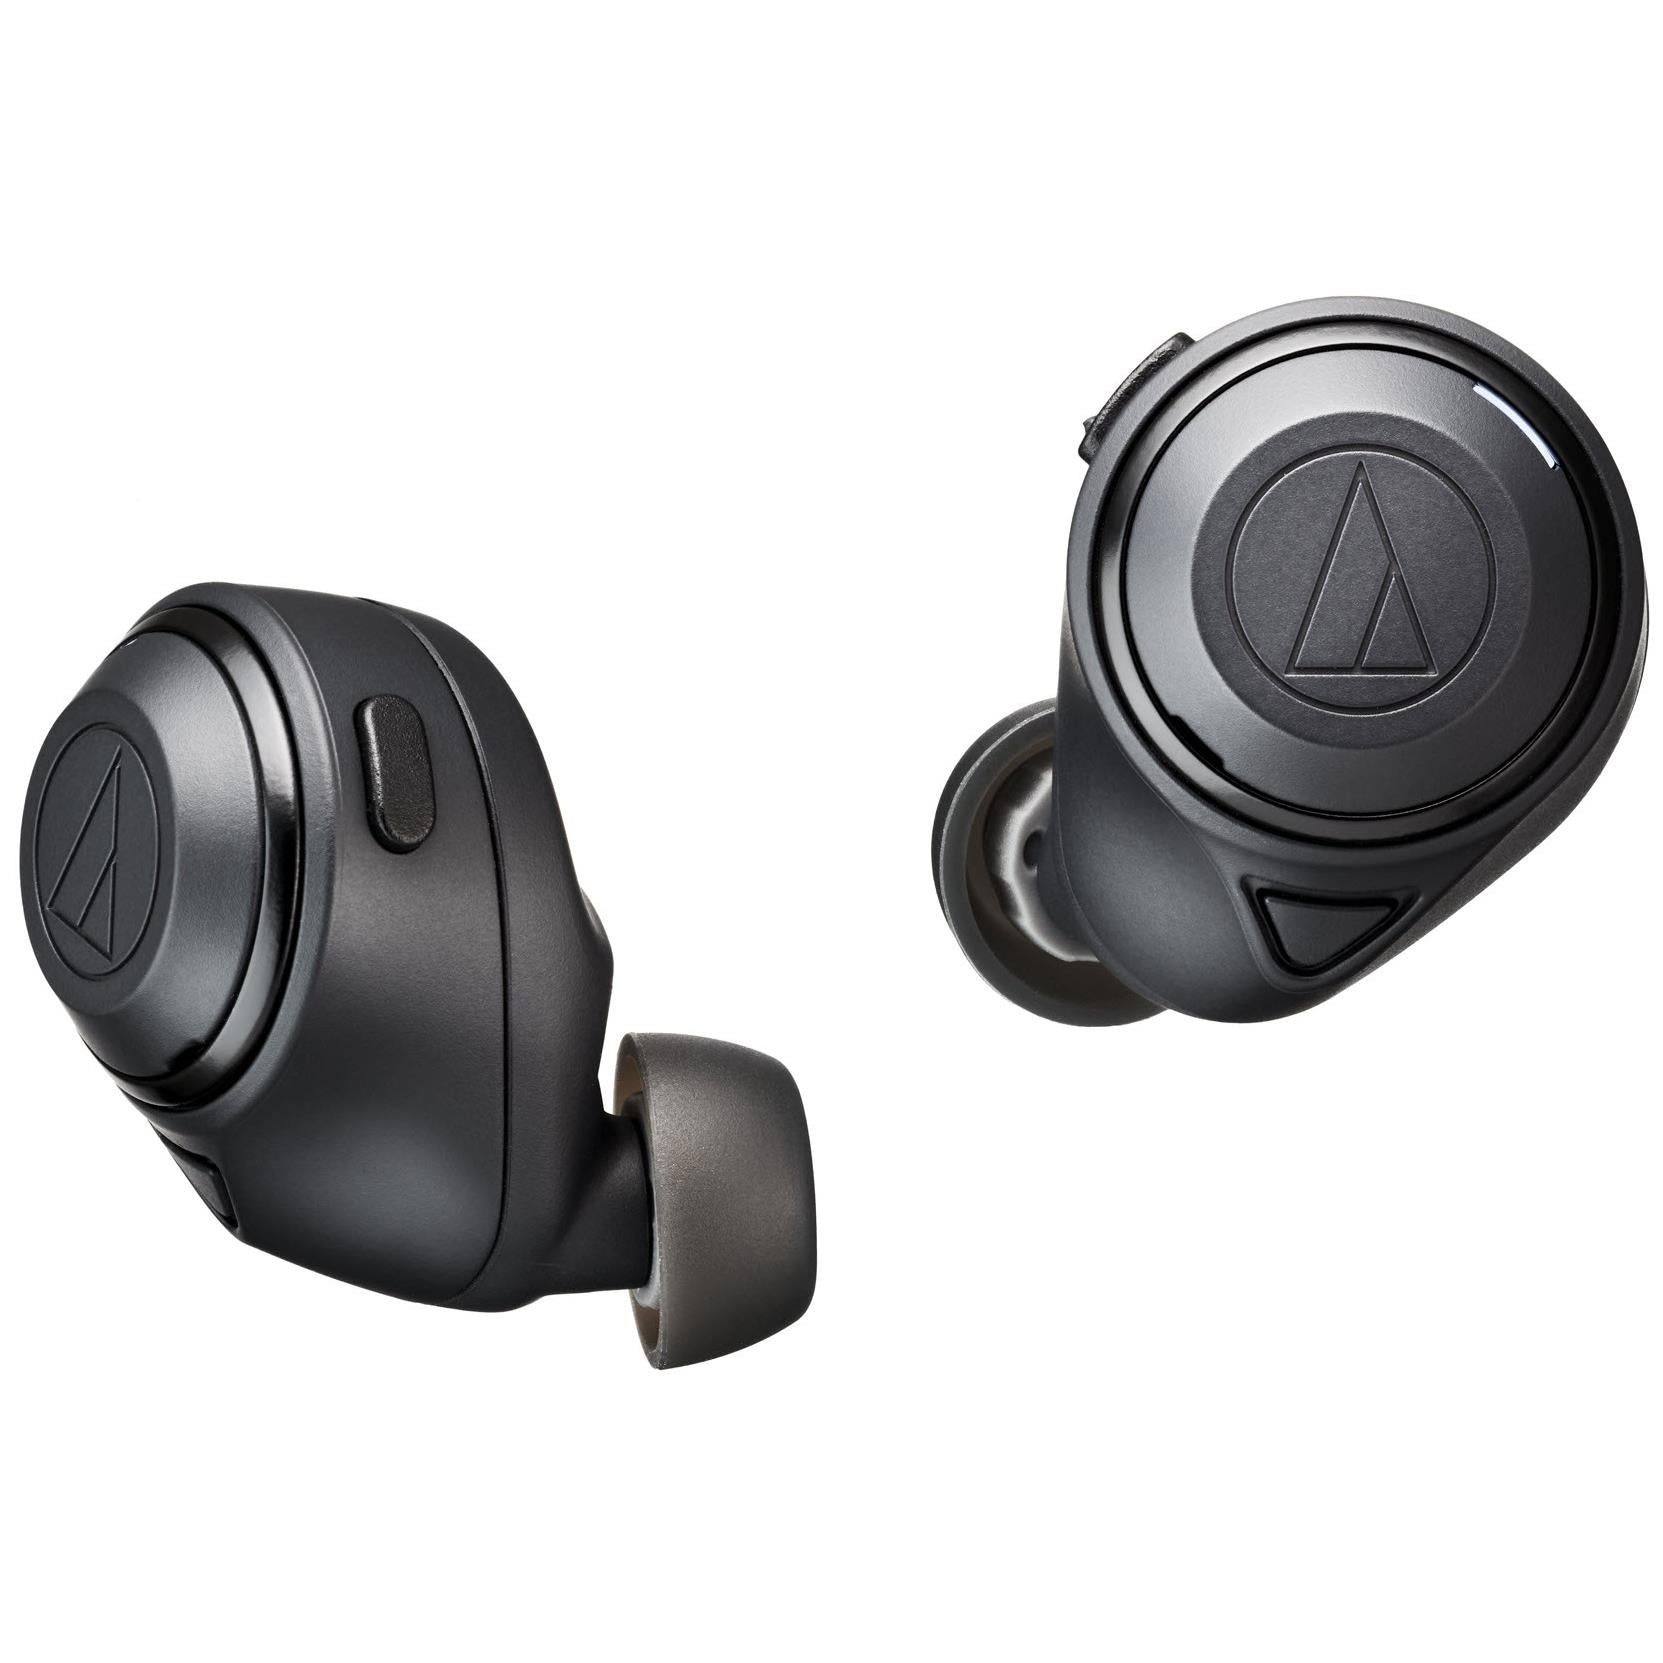 audio-technica ath-cks50tw truly wireless in-ear headphones (black)